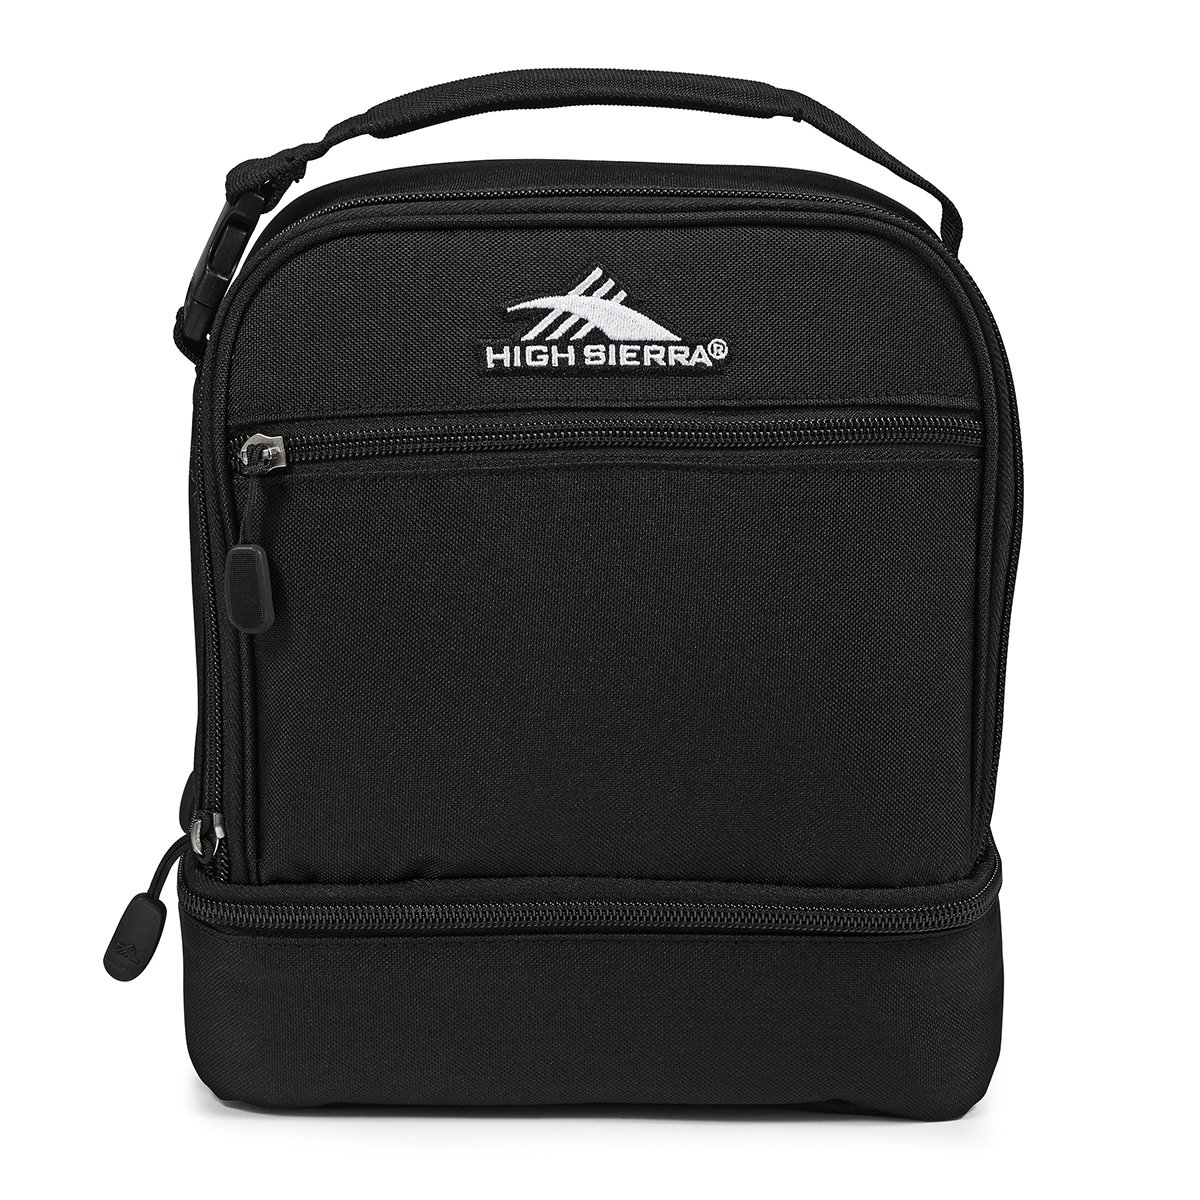 High Sierra(R) Black Stacked Lunch Bag